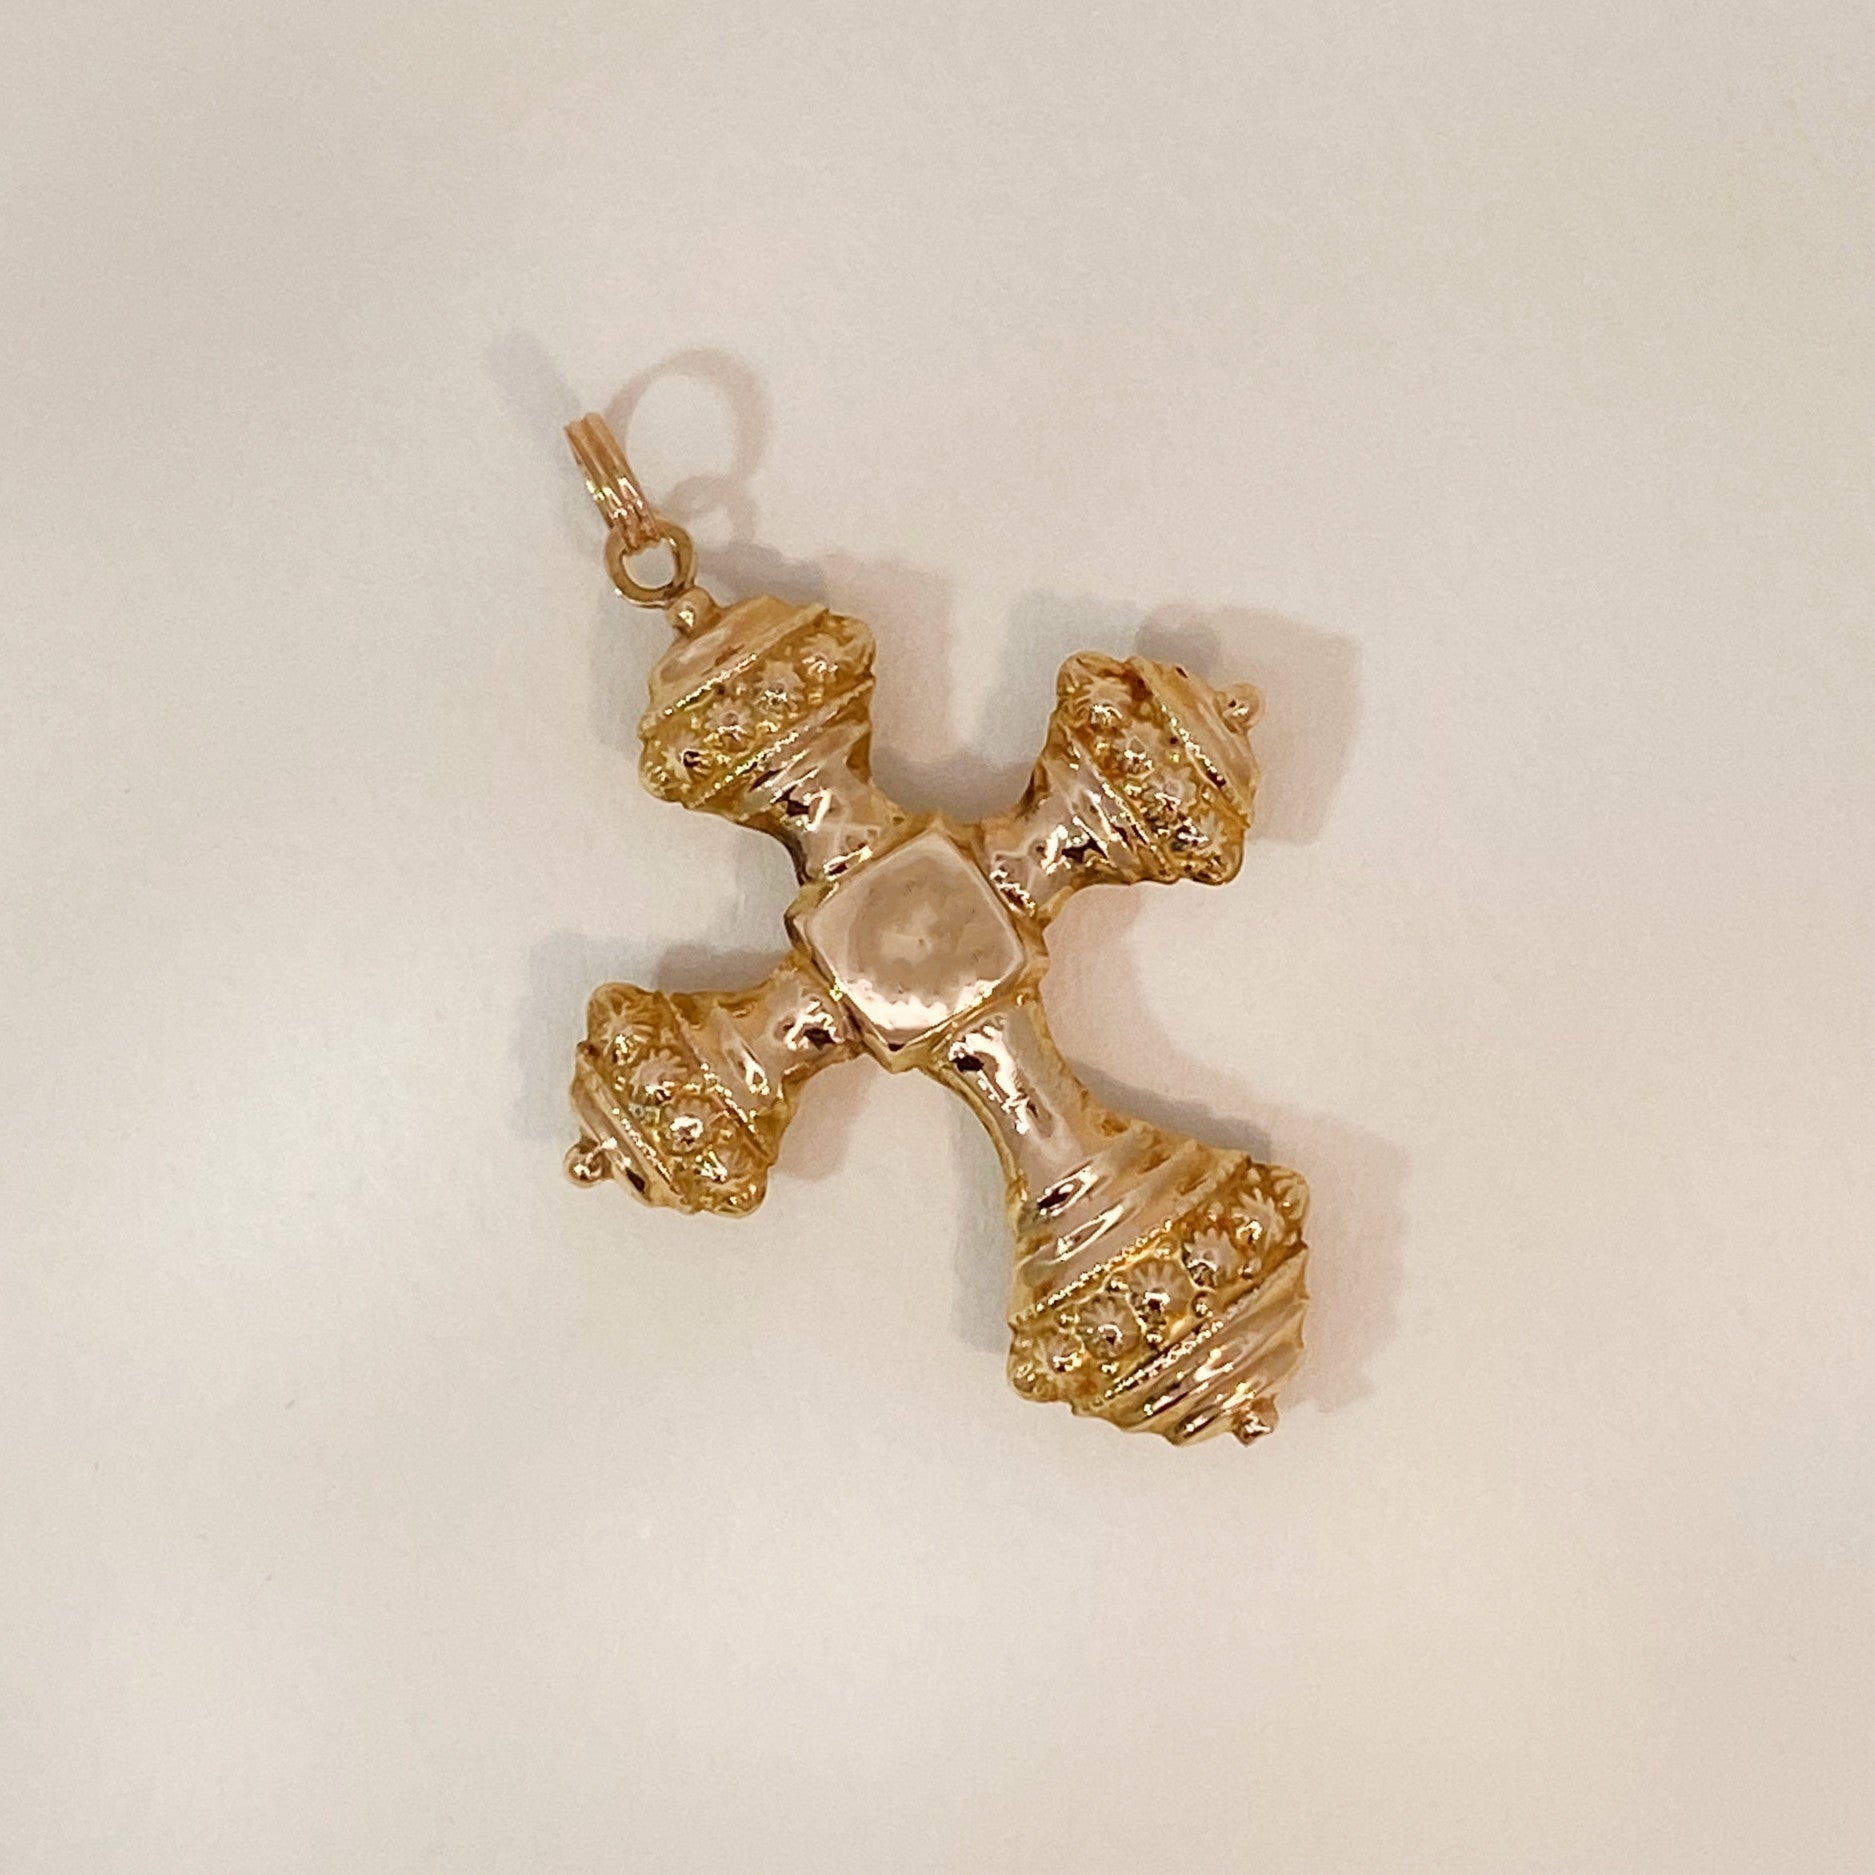 Vintage cross pendant